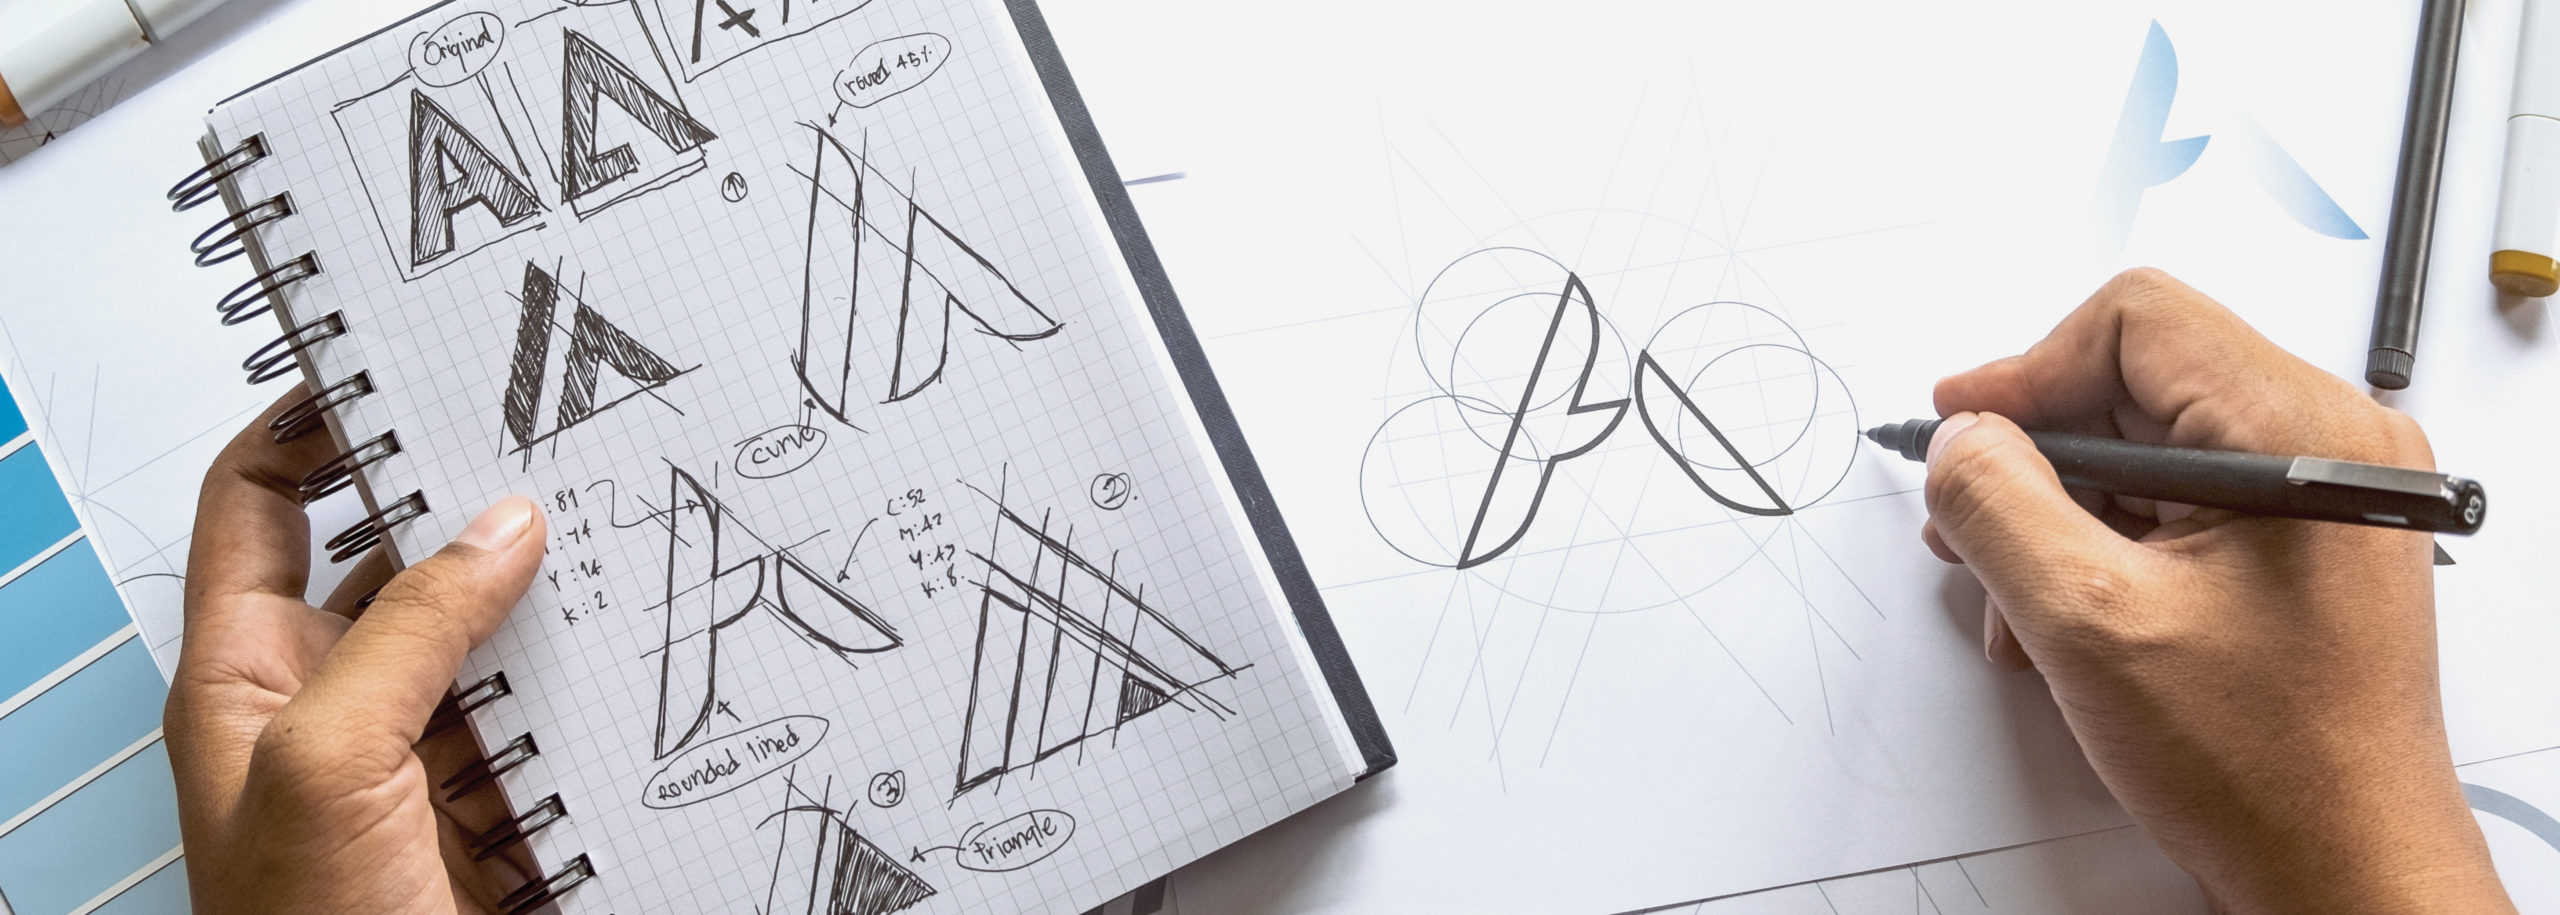 Sketching logo design ideas on notebook creative agency